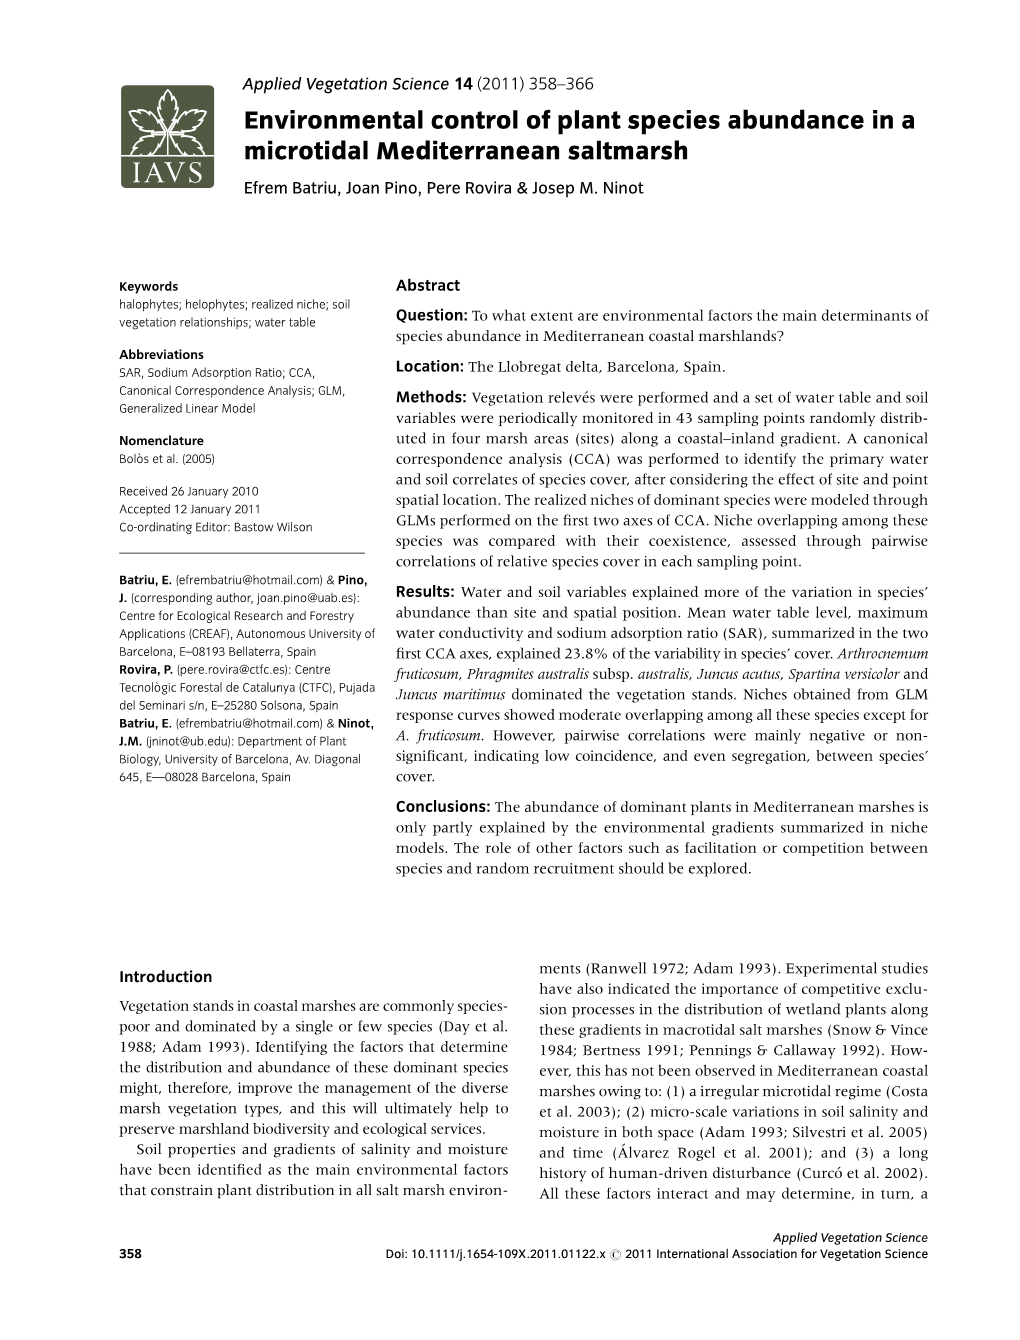 Environmental Control of Plant Species Abundance in a Microtidal Mediterranean Saltmarsh Efrem Batriu, Joan Pino, Pere Rovira & Josep M